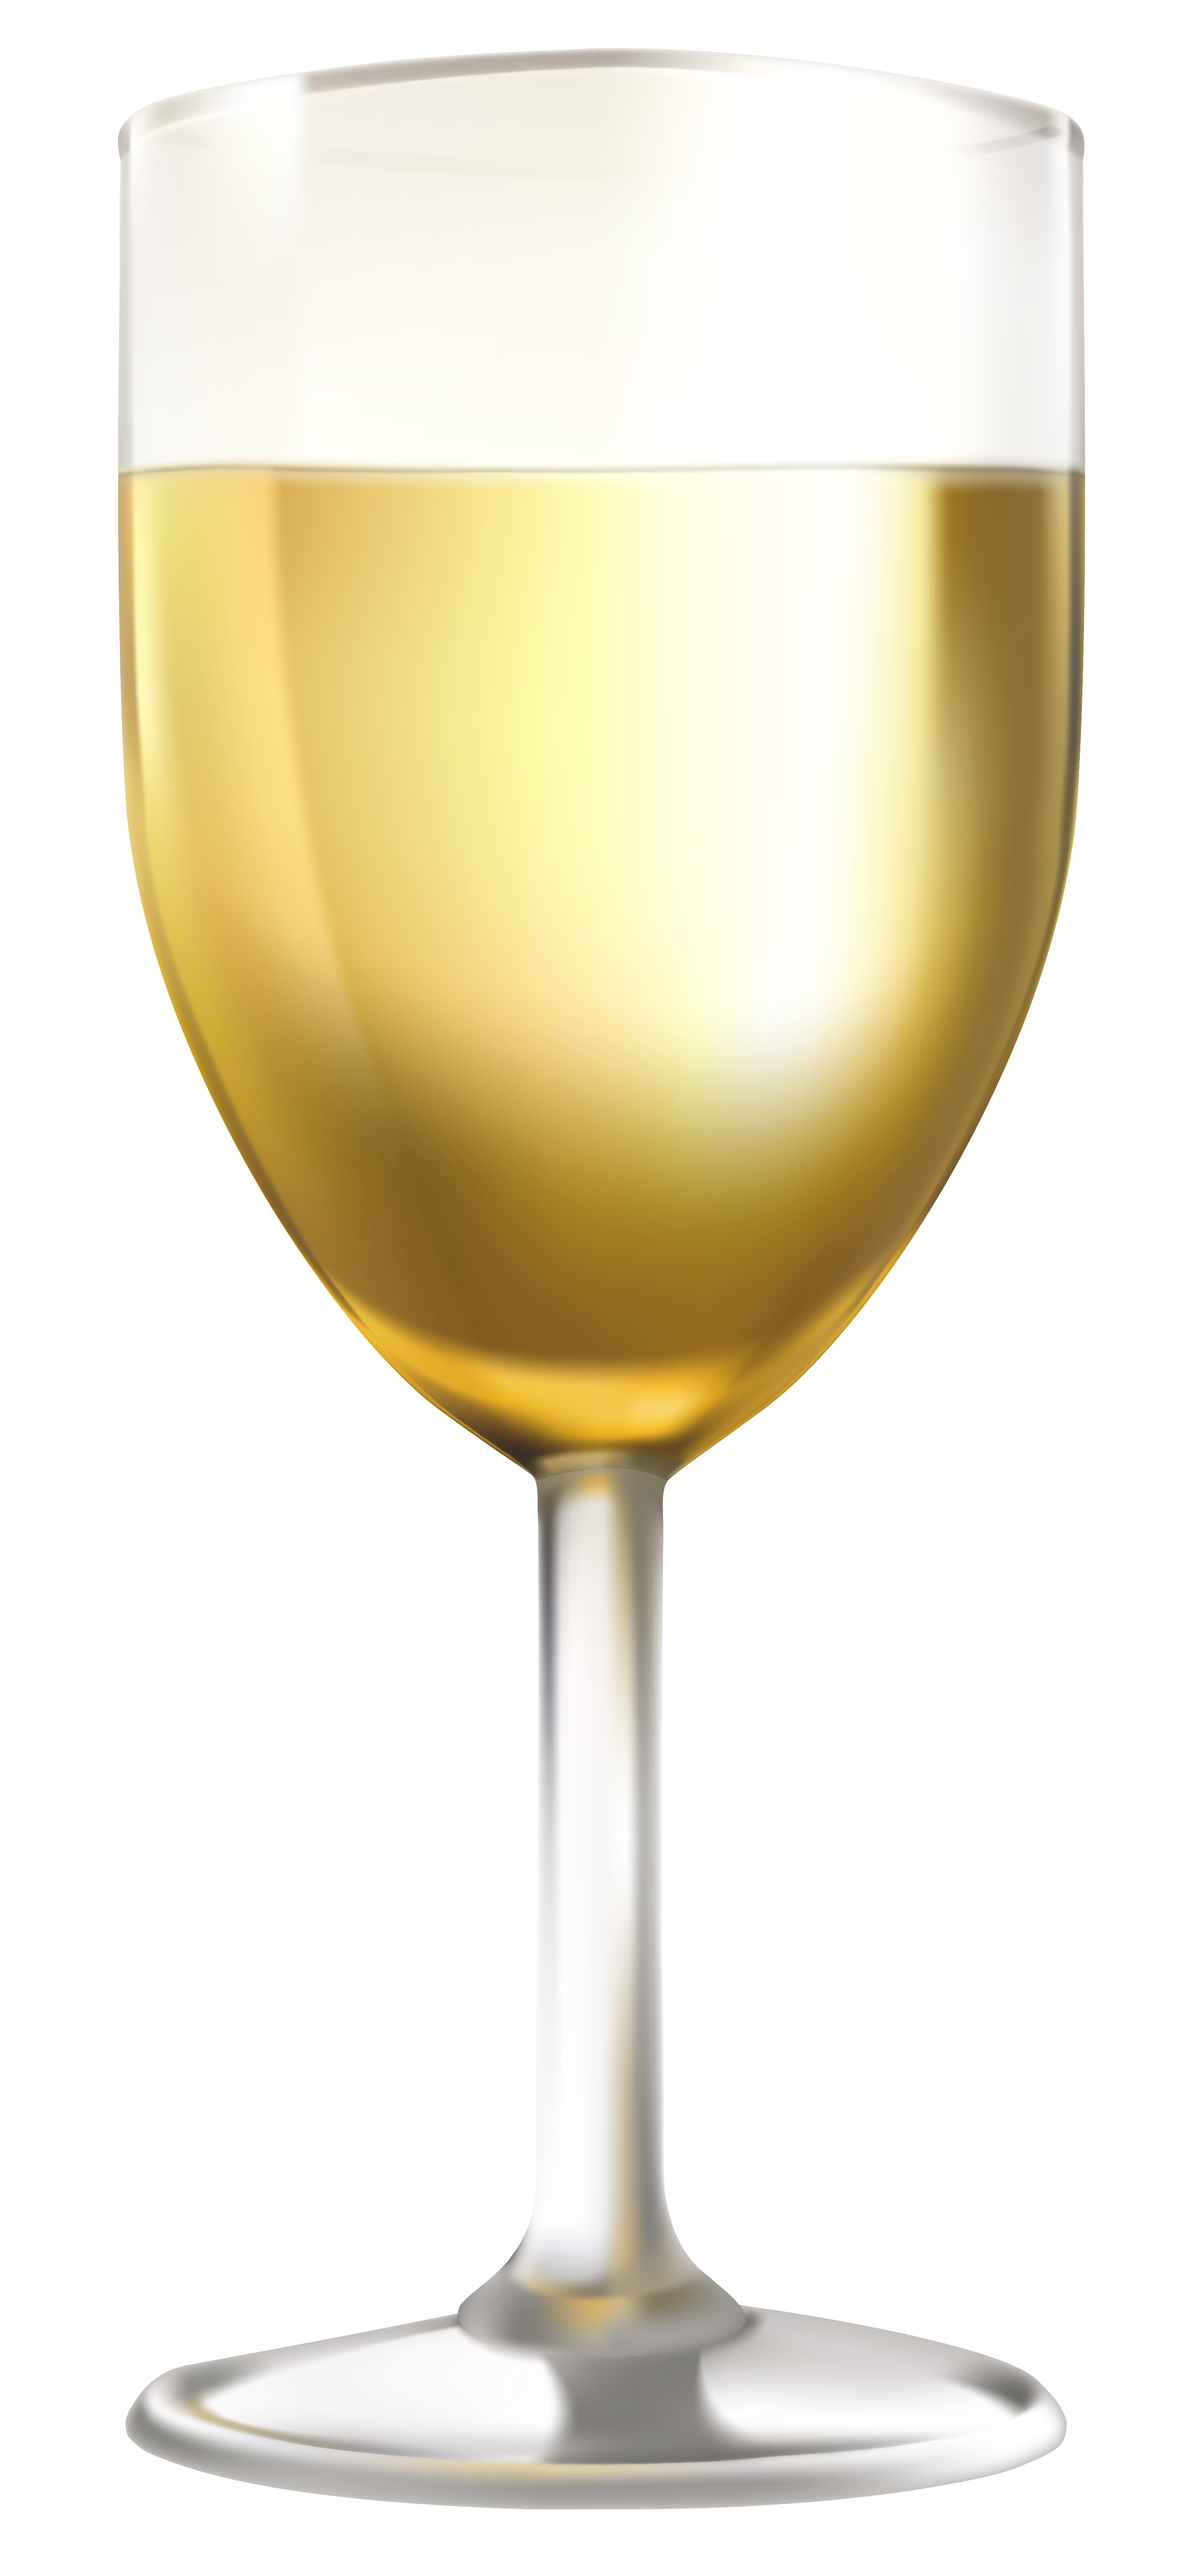 White glass clip art. Halloween clipart wine